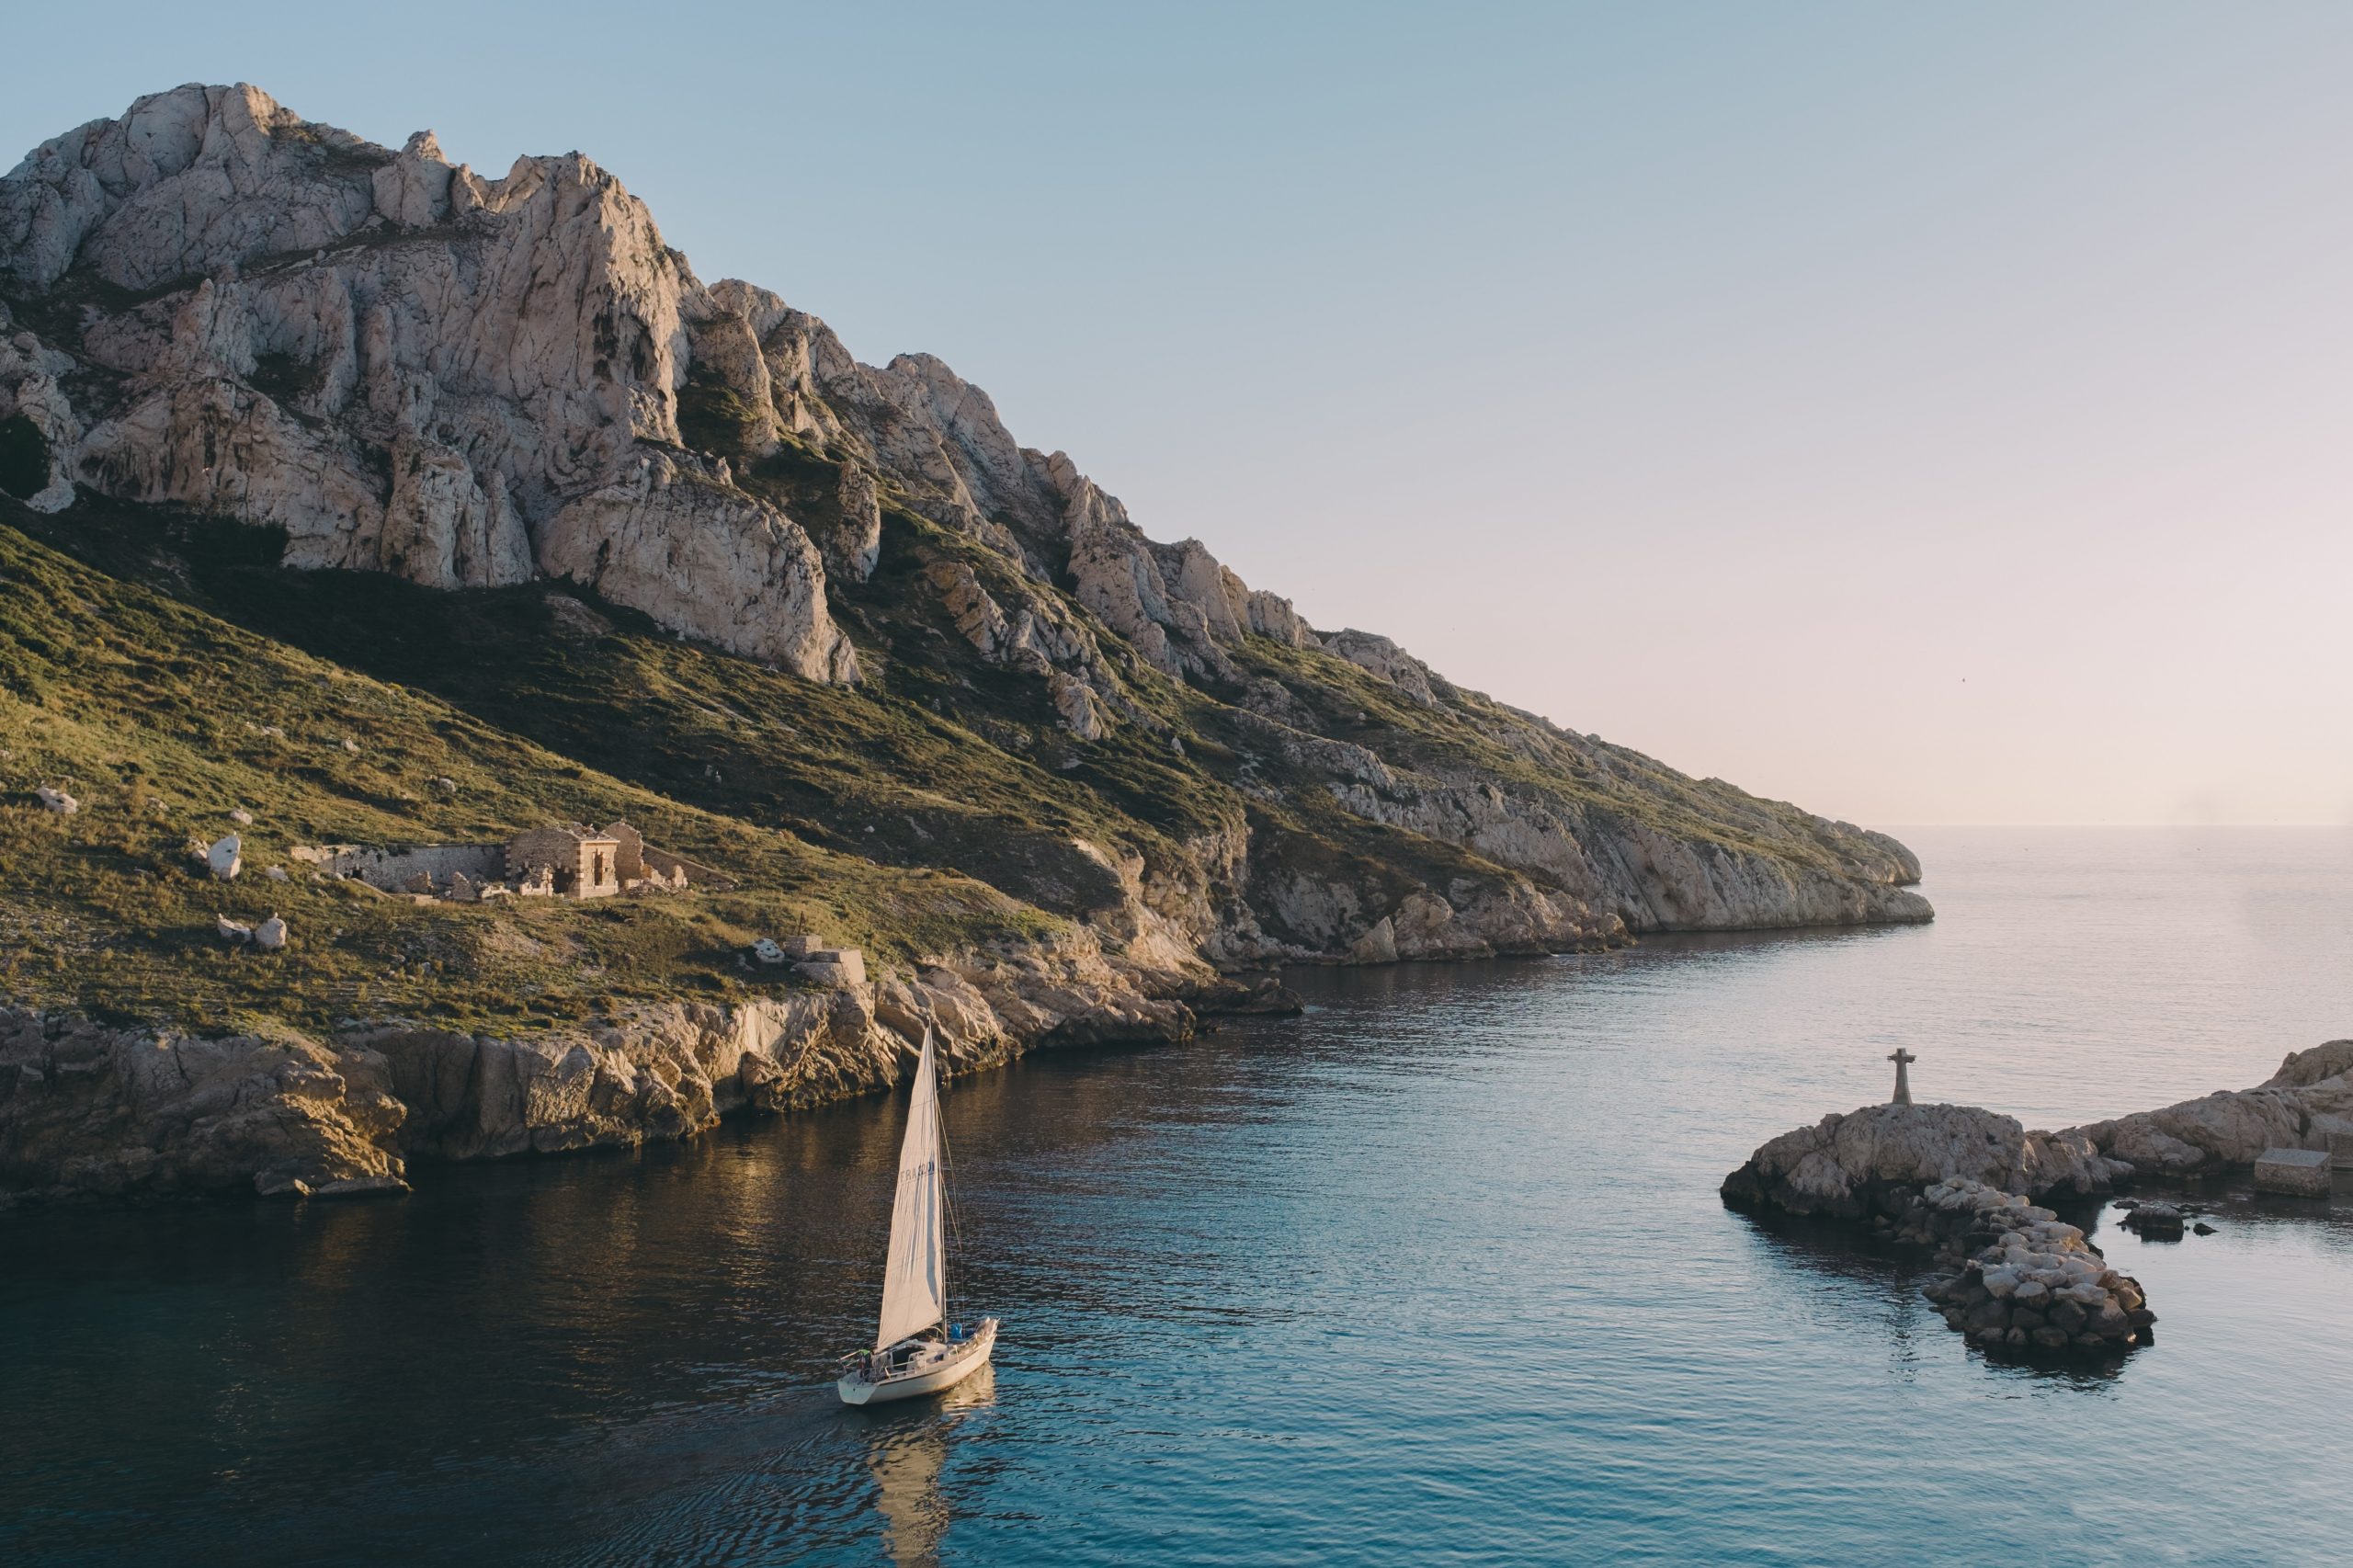 Frioul archipelago, Marseille - Best 20 Destinations for Europeans